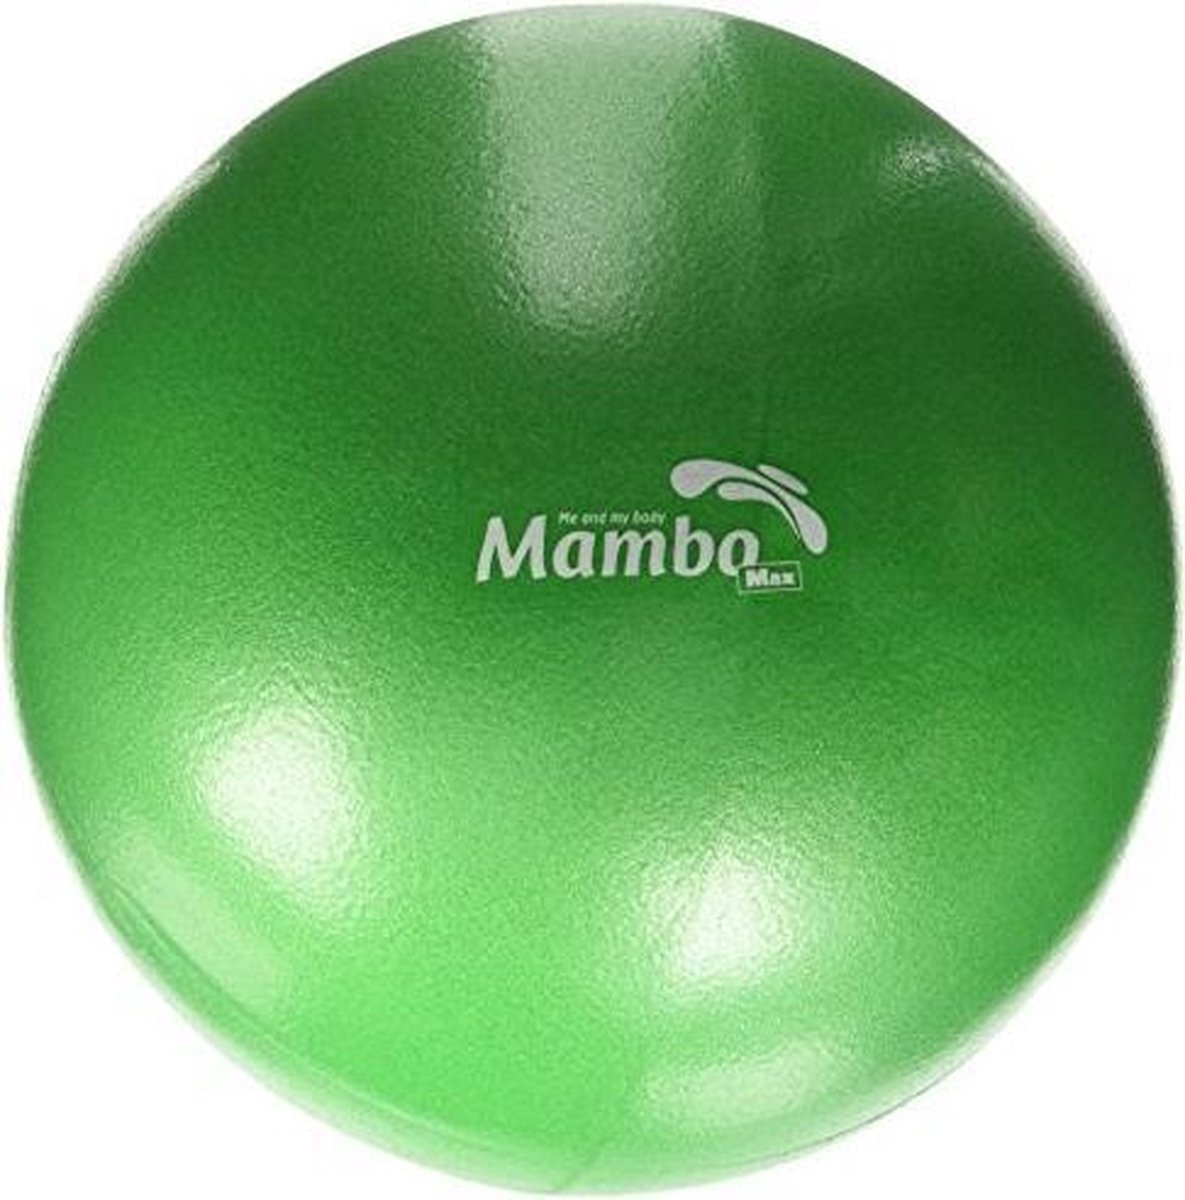 Mambo Max - soft over ball - groen - 21-23 cm